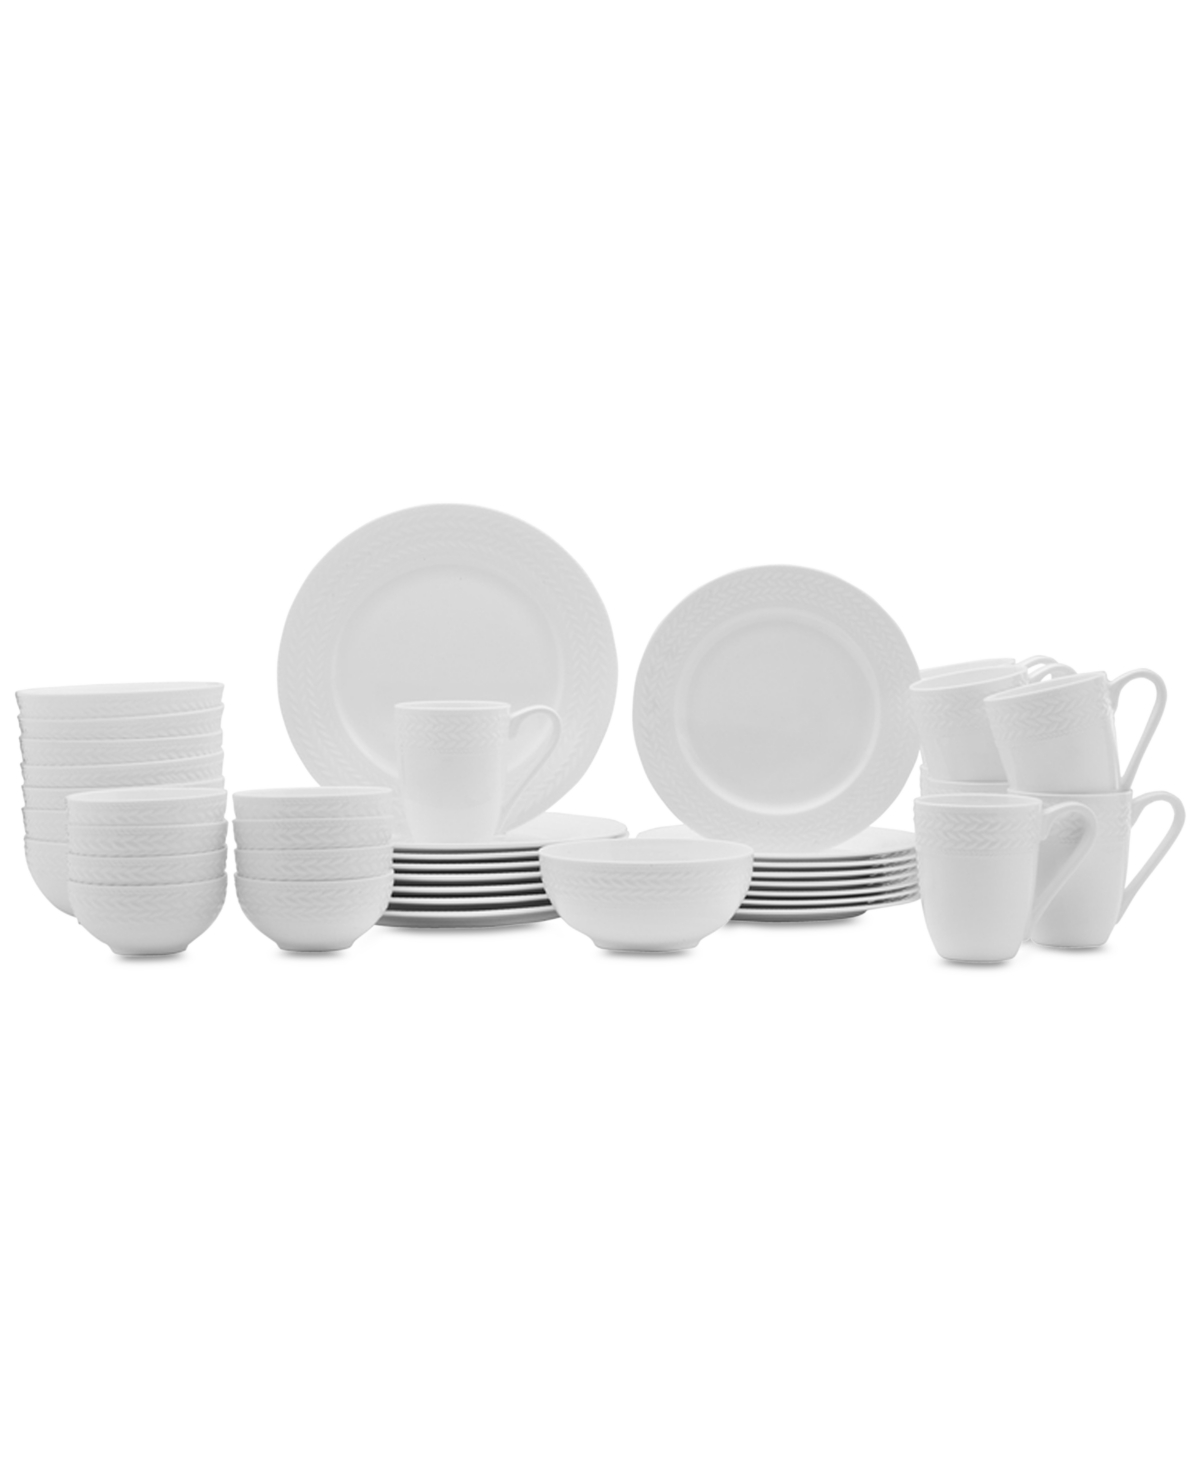 Tate 40-Pc. Dinnerware Set, Service for 8 - White